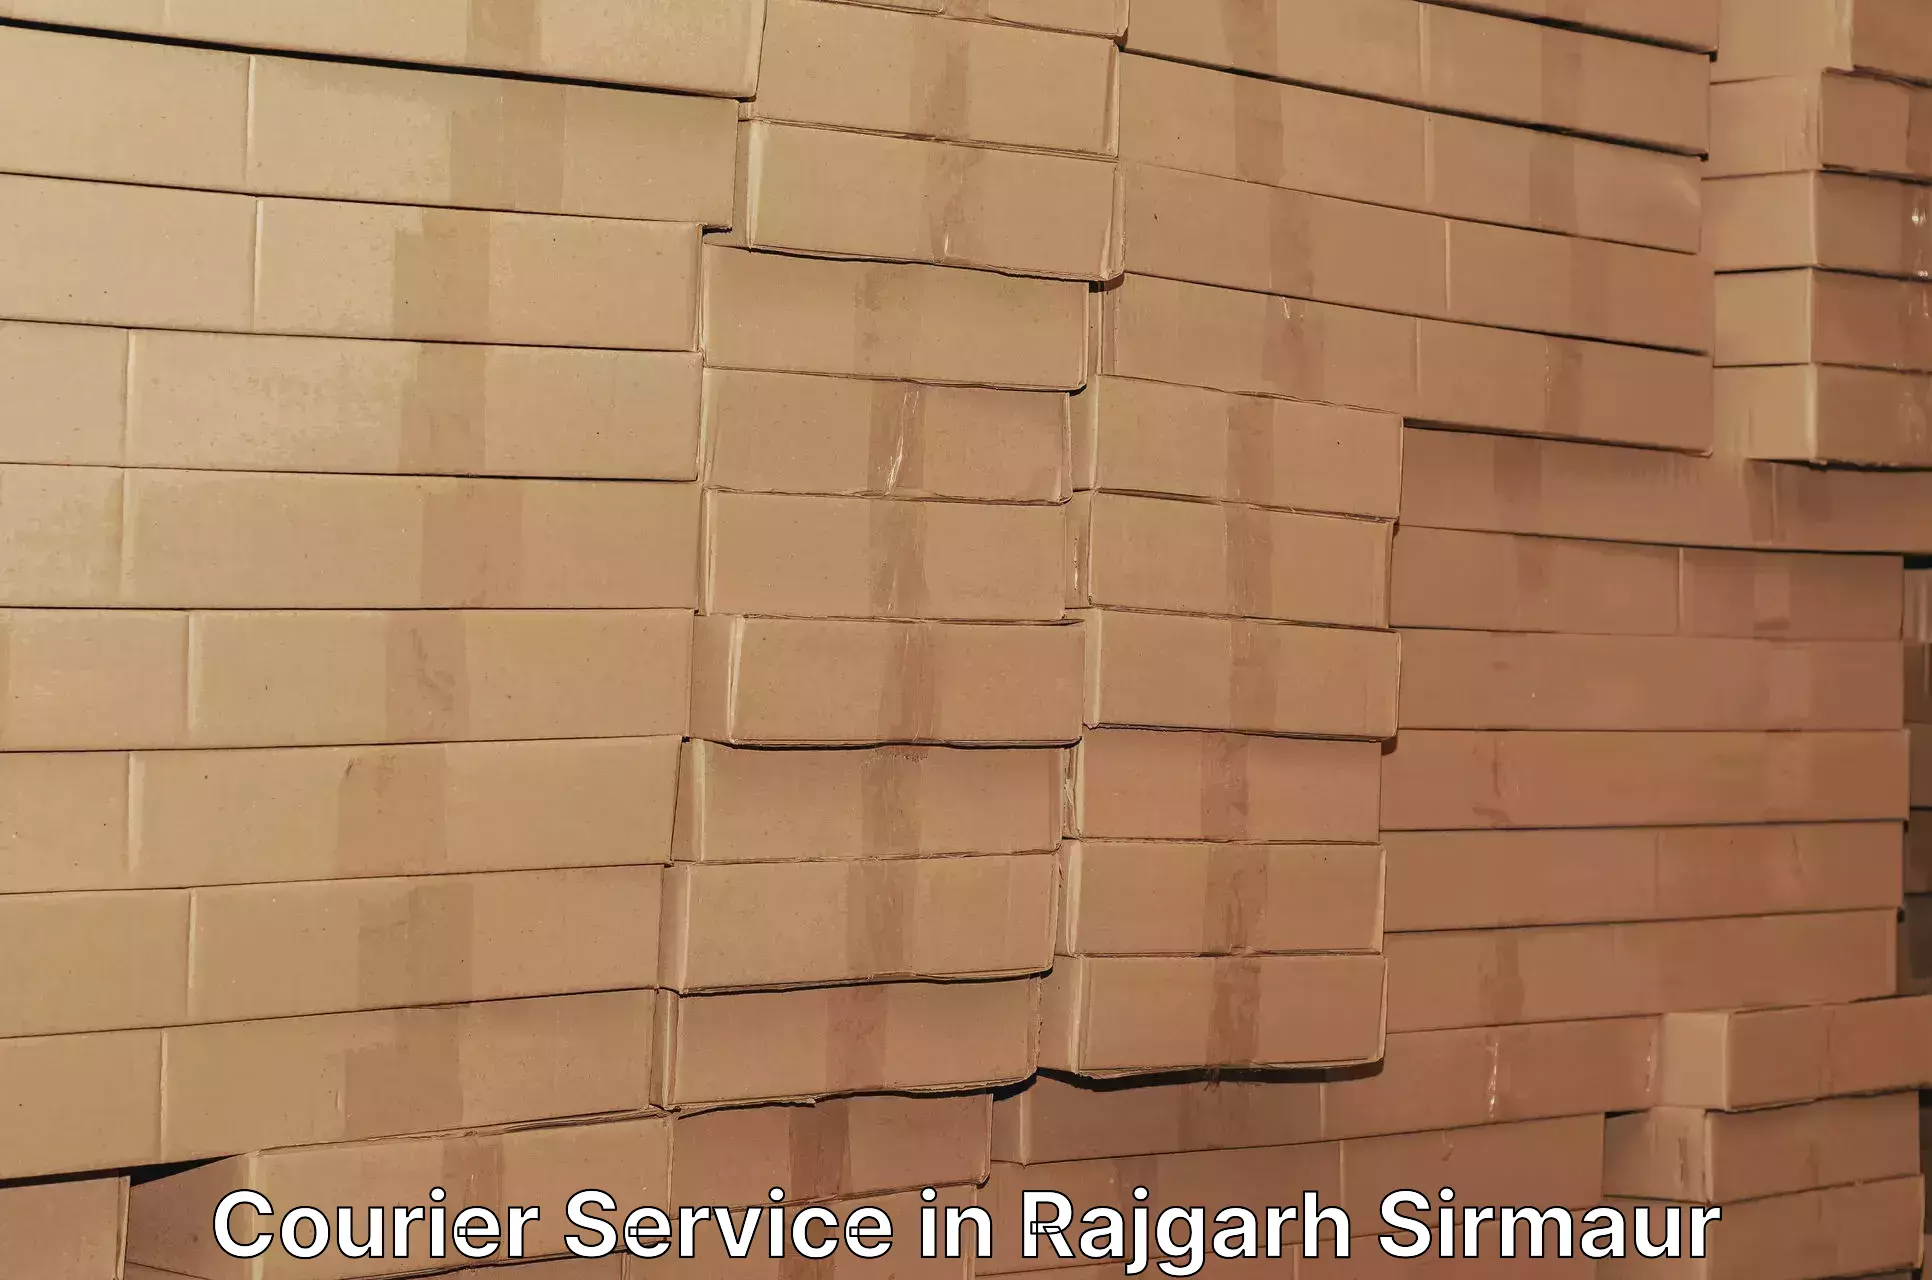 Efficient shipping platforms in Rajgarh Sirmaur